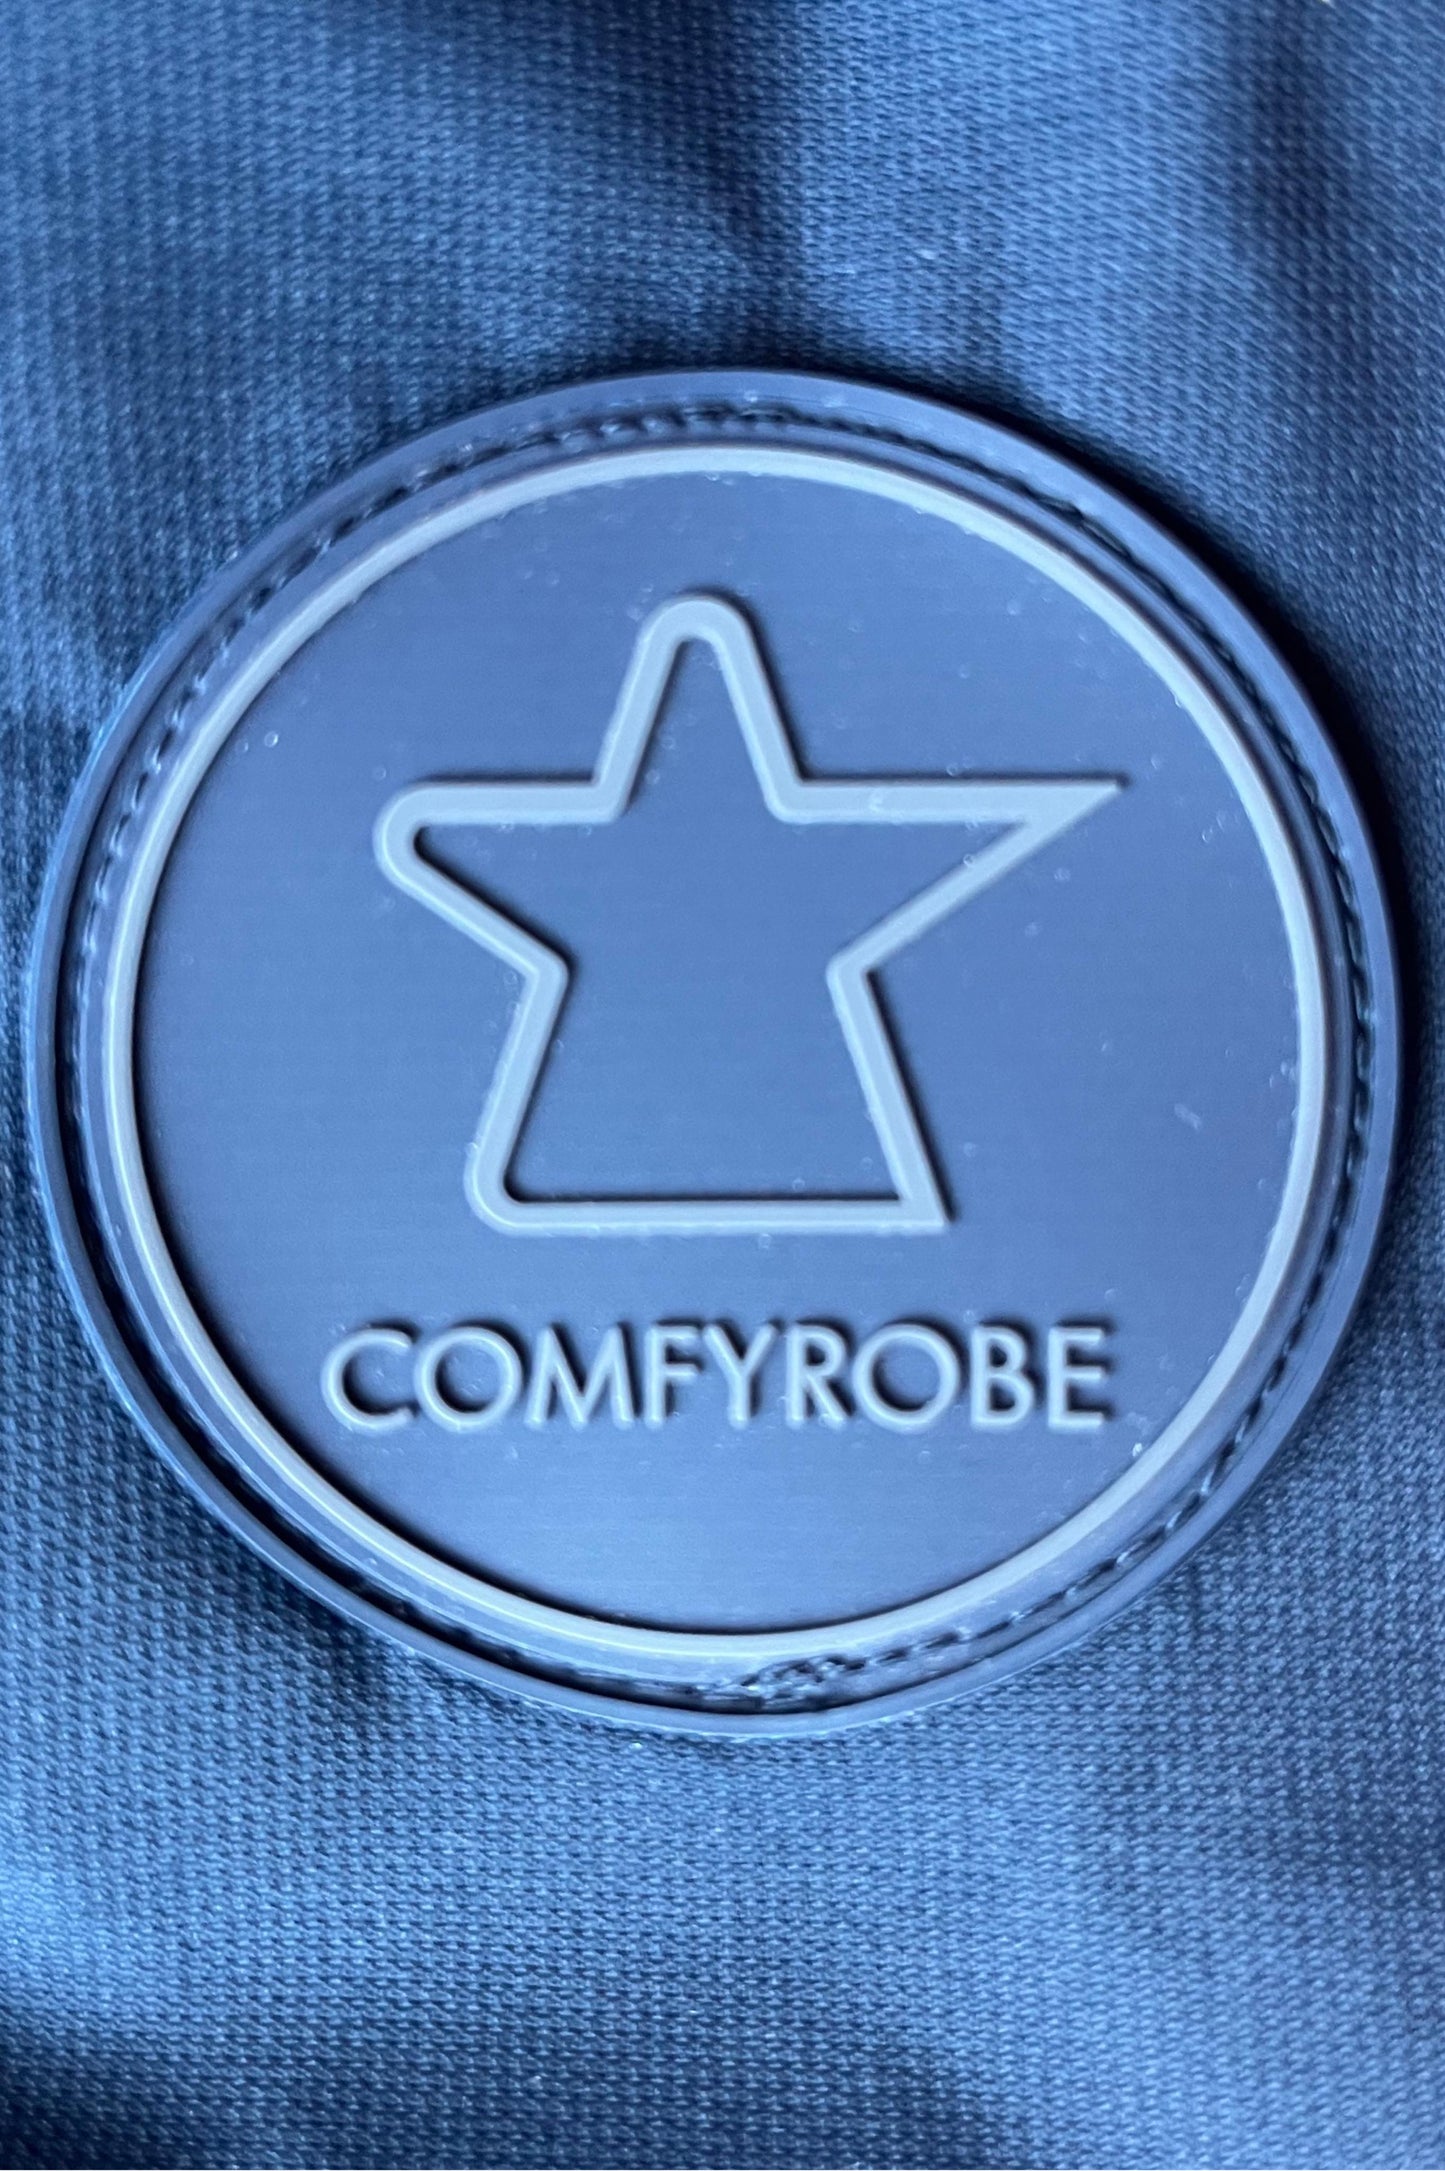 Comfyrobe™